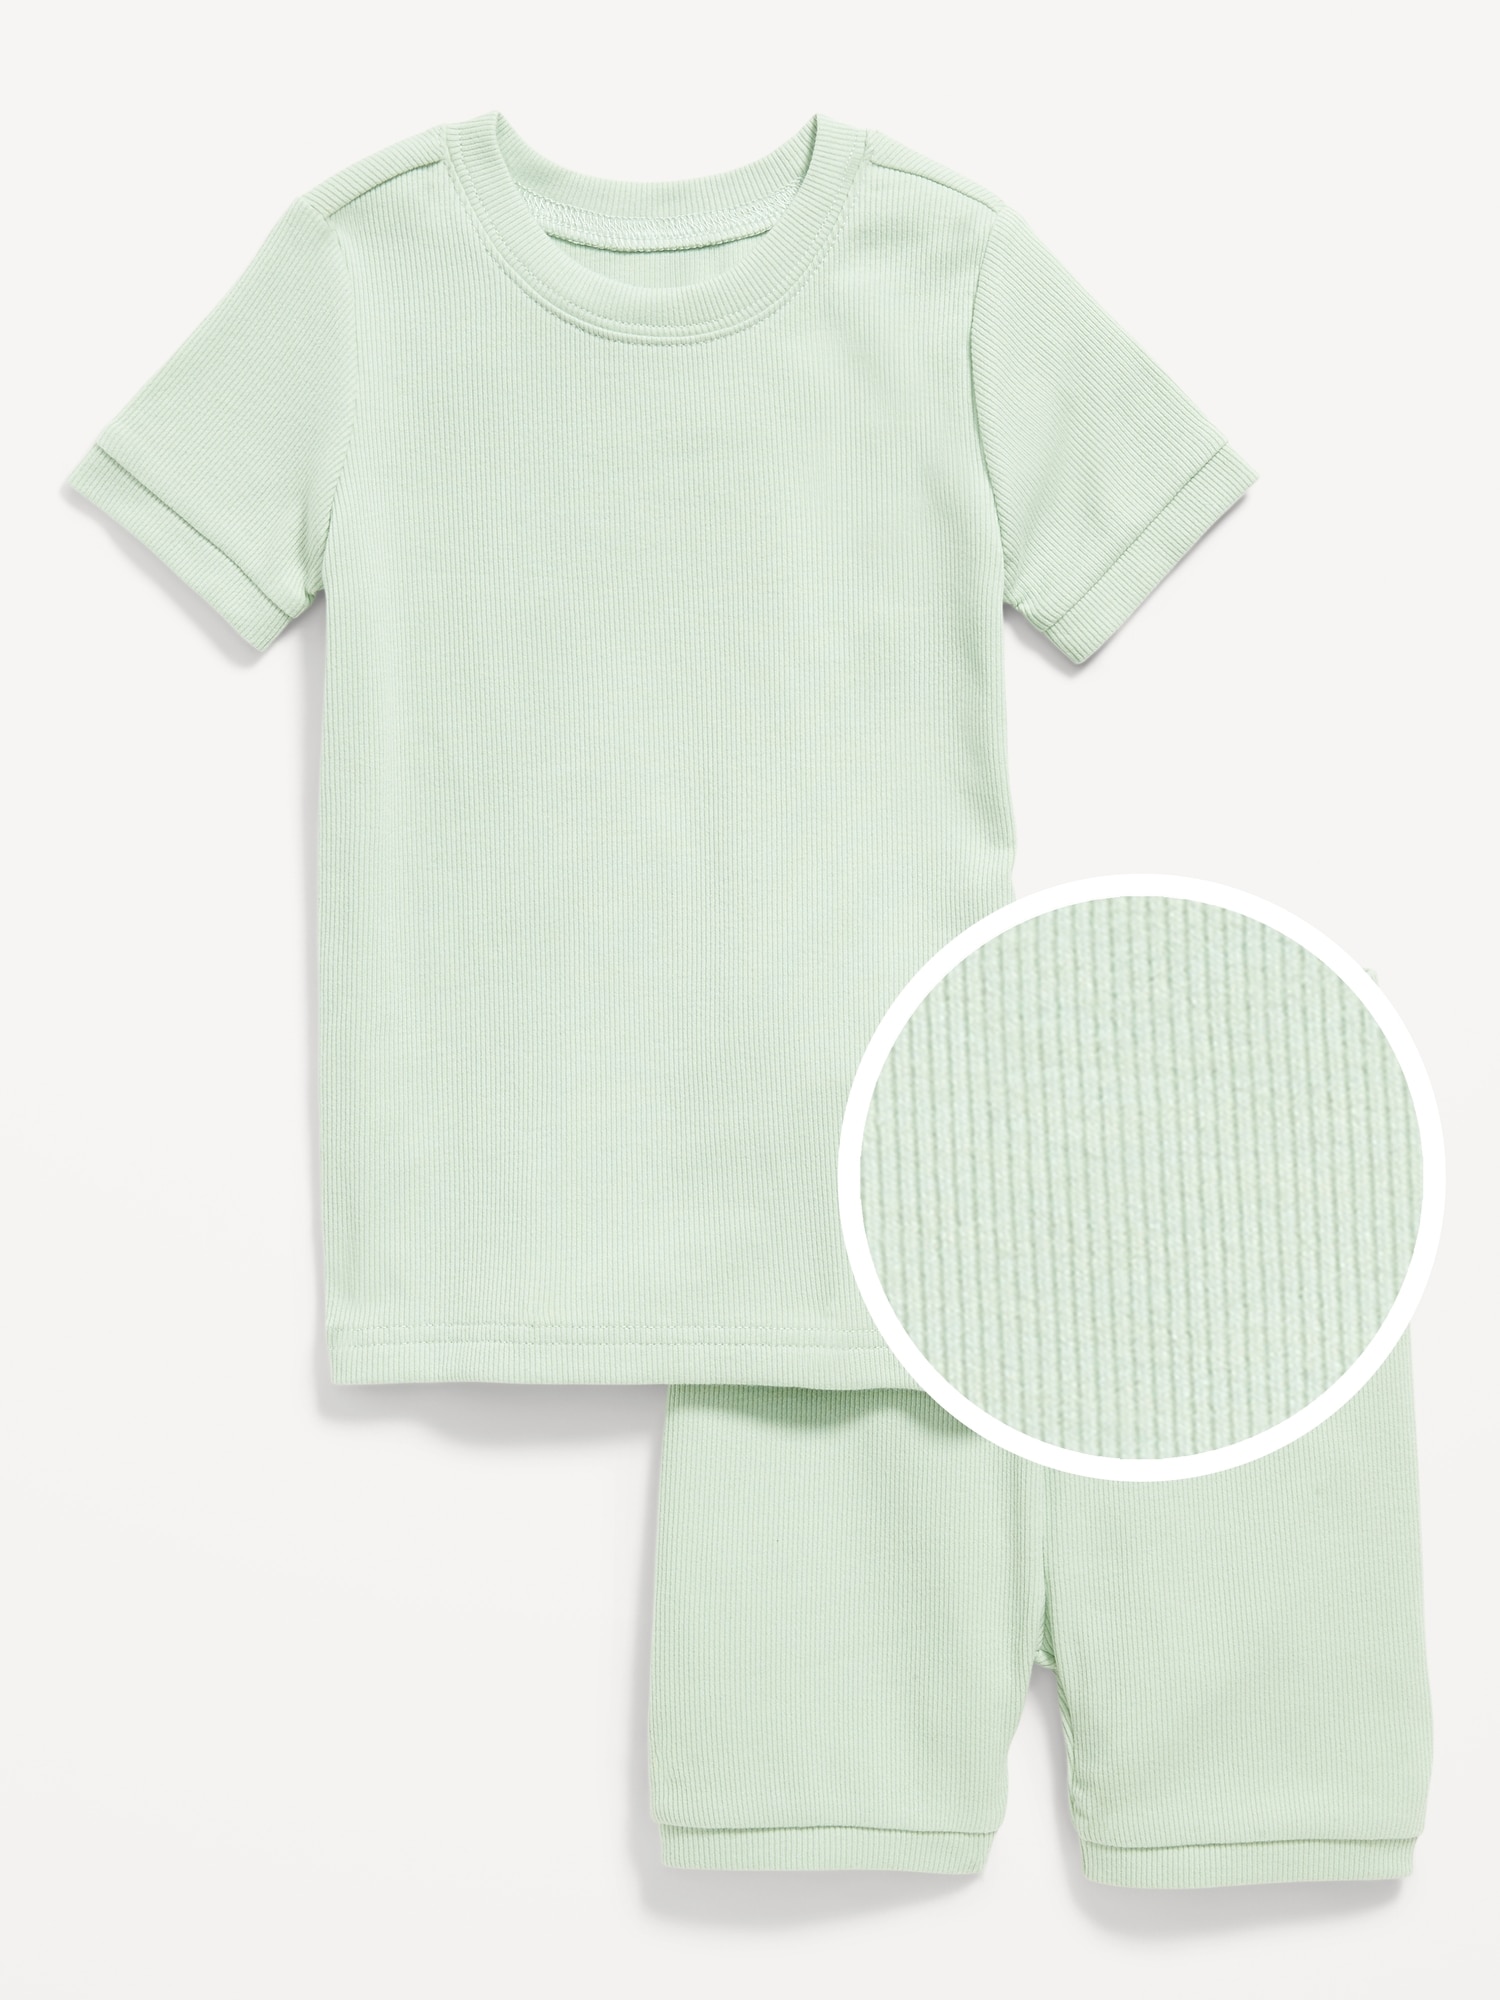 Unisex Snug-Fit Ribbed Pajama Set for Toddler & Baby